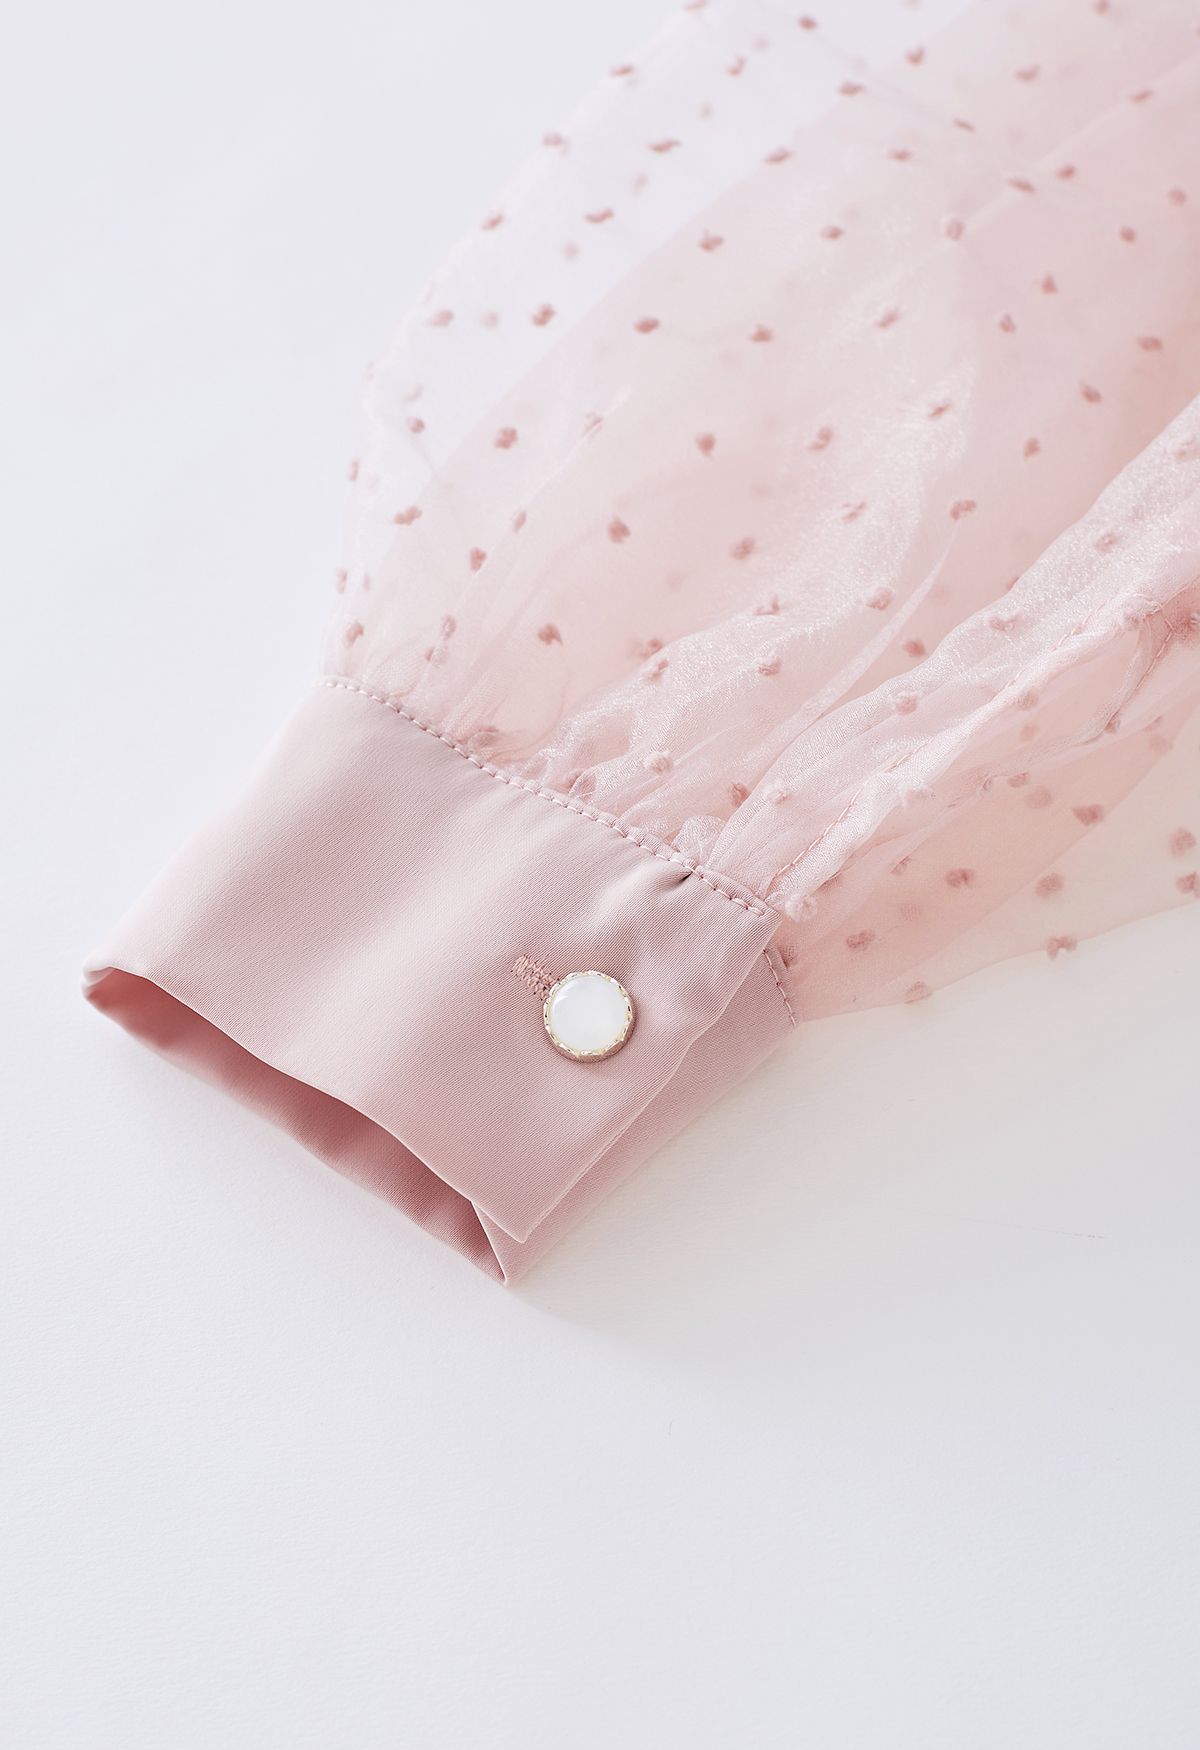 Flock Dots Organza Bubble Sleeve Bowknot Satin Shirt in Rosa